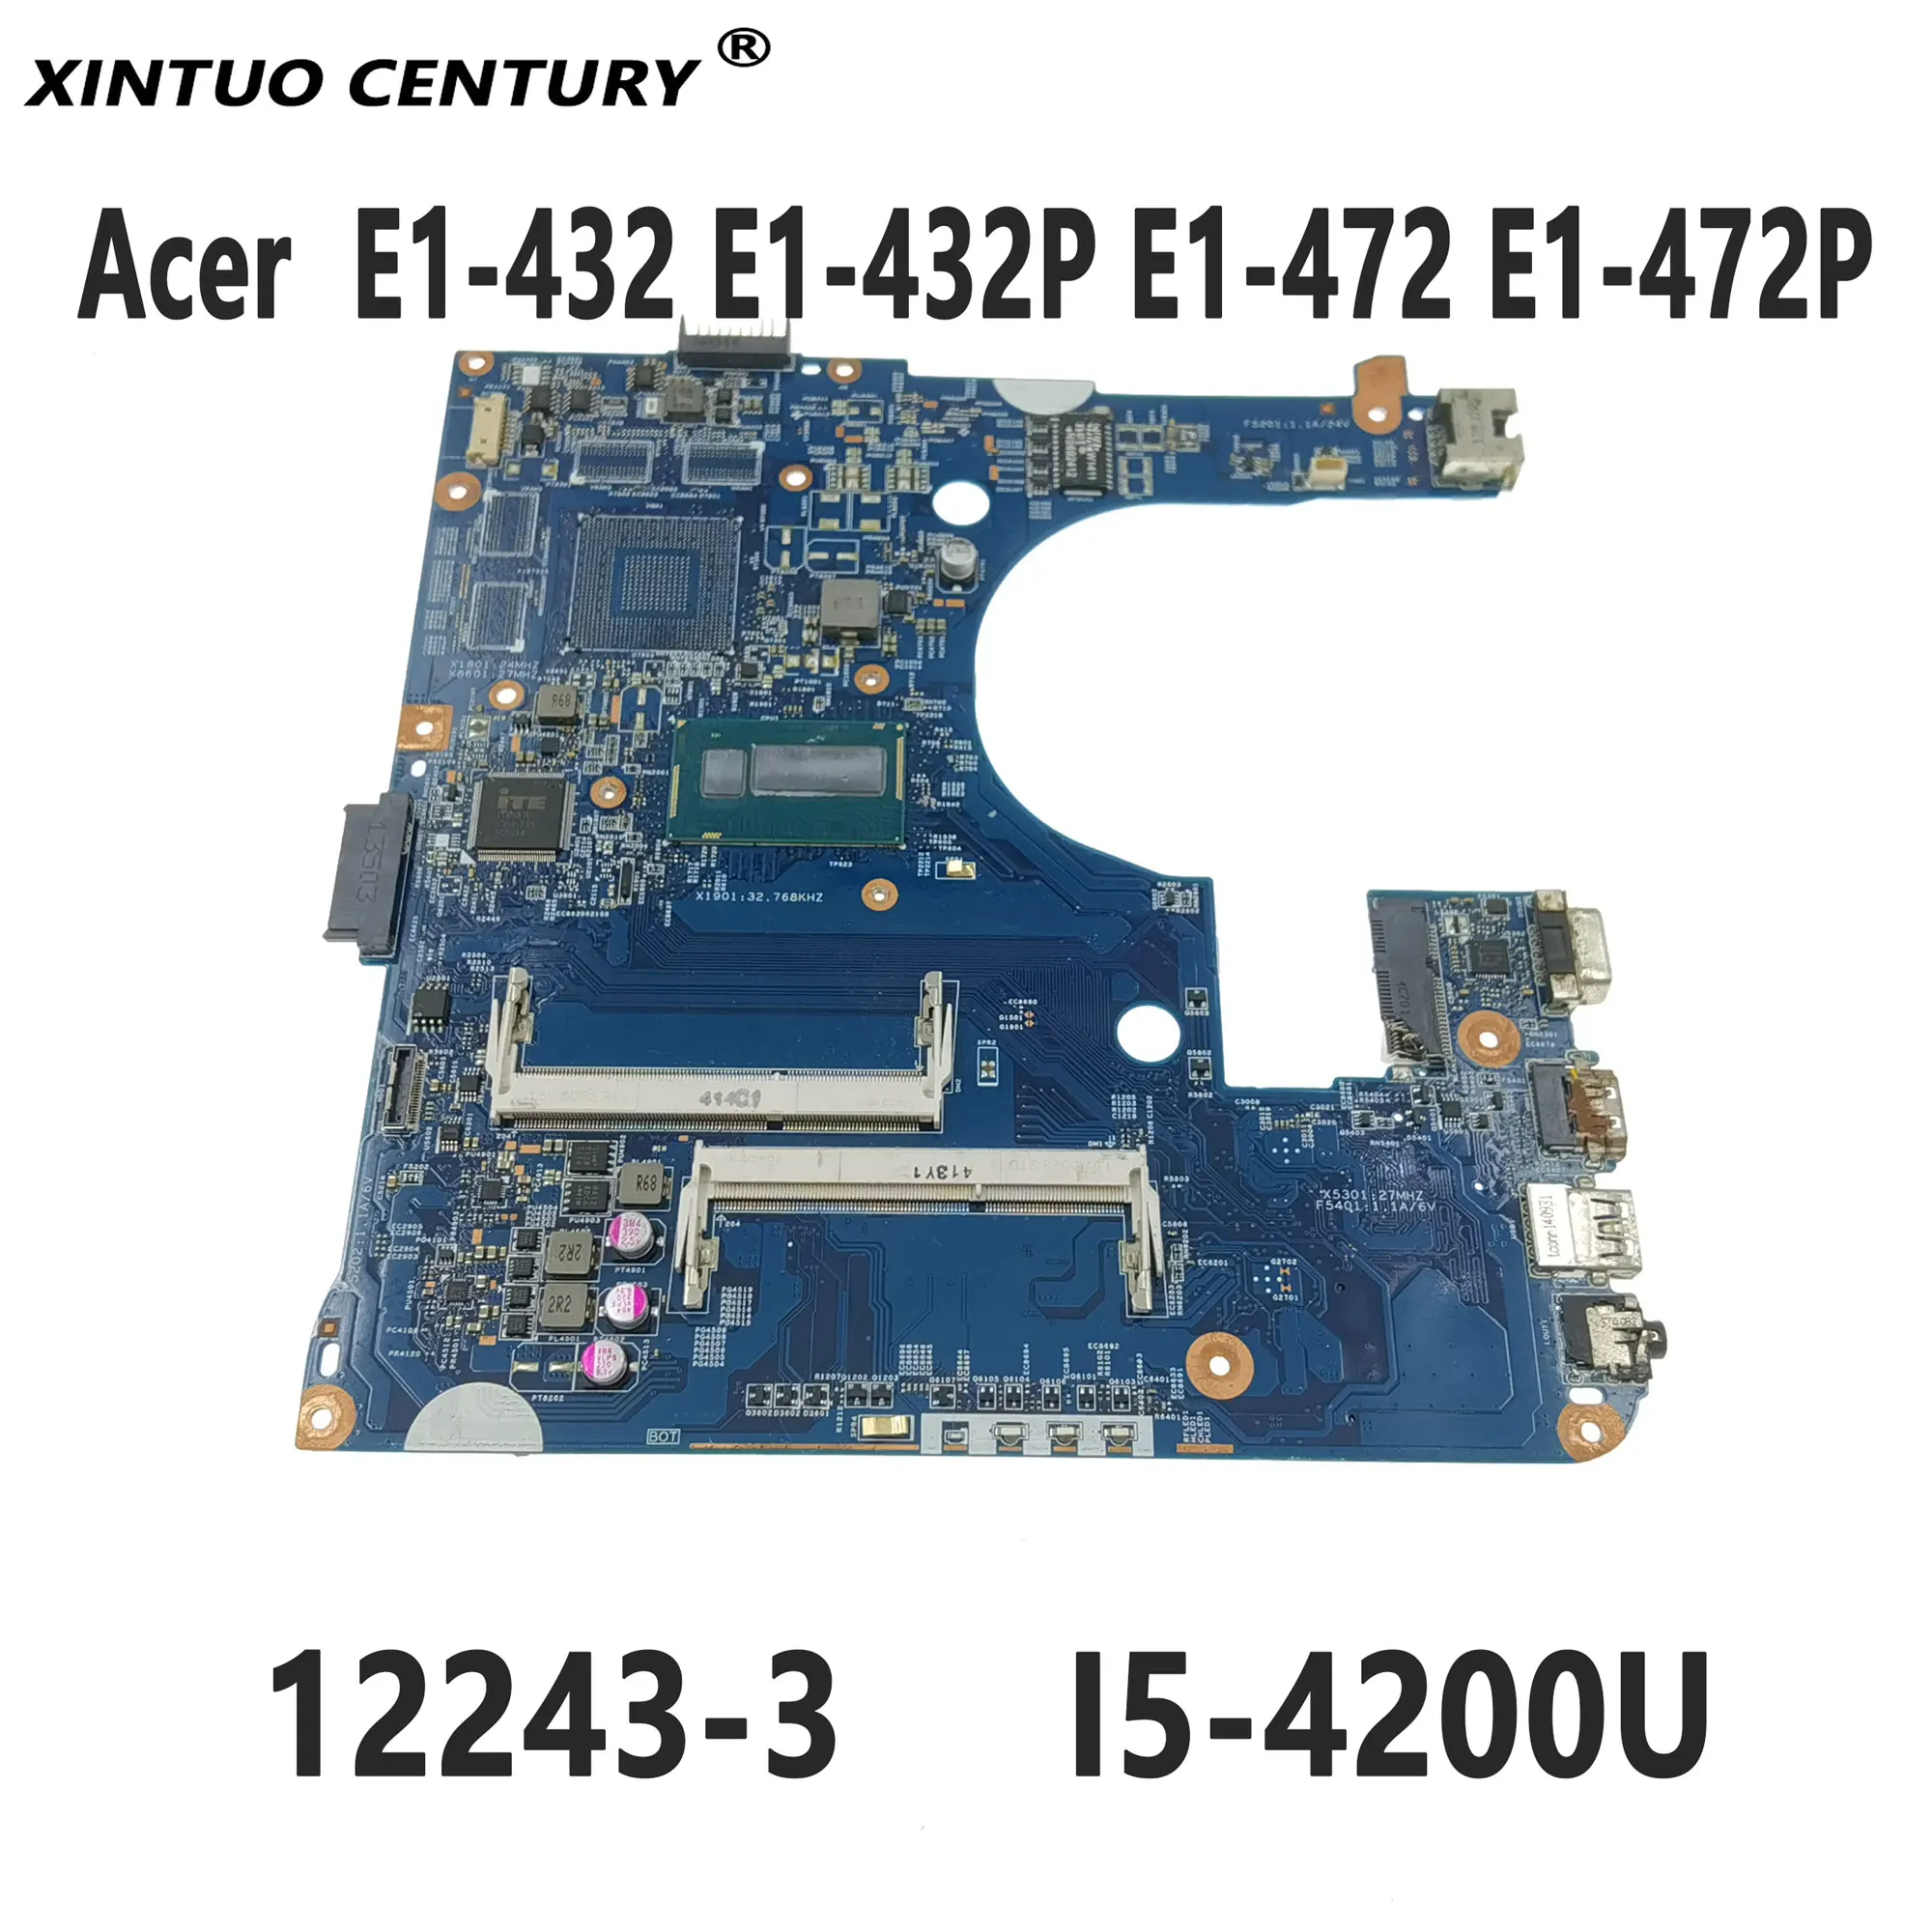 

Материнская плата NBMFJ11003 для ноутбука ACER E1-432 E1-432P E1-472 E1-472P, 12243 yp21. 031 100%-3 NB.M7V11.008 I5-4200U CPU протестирована